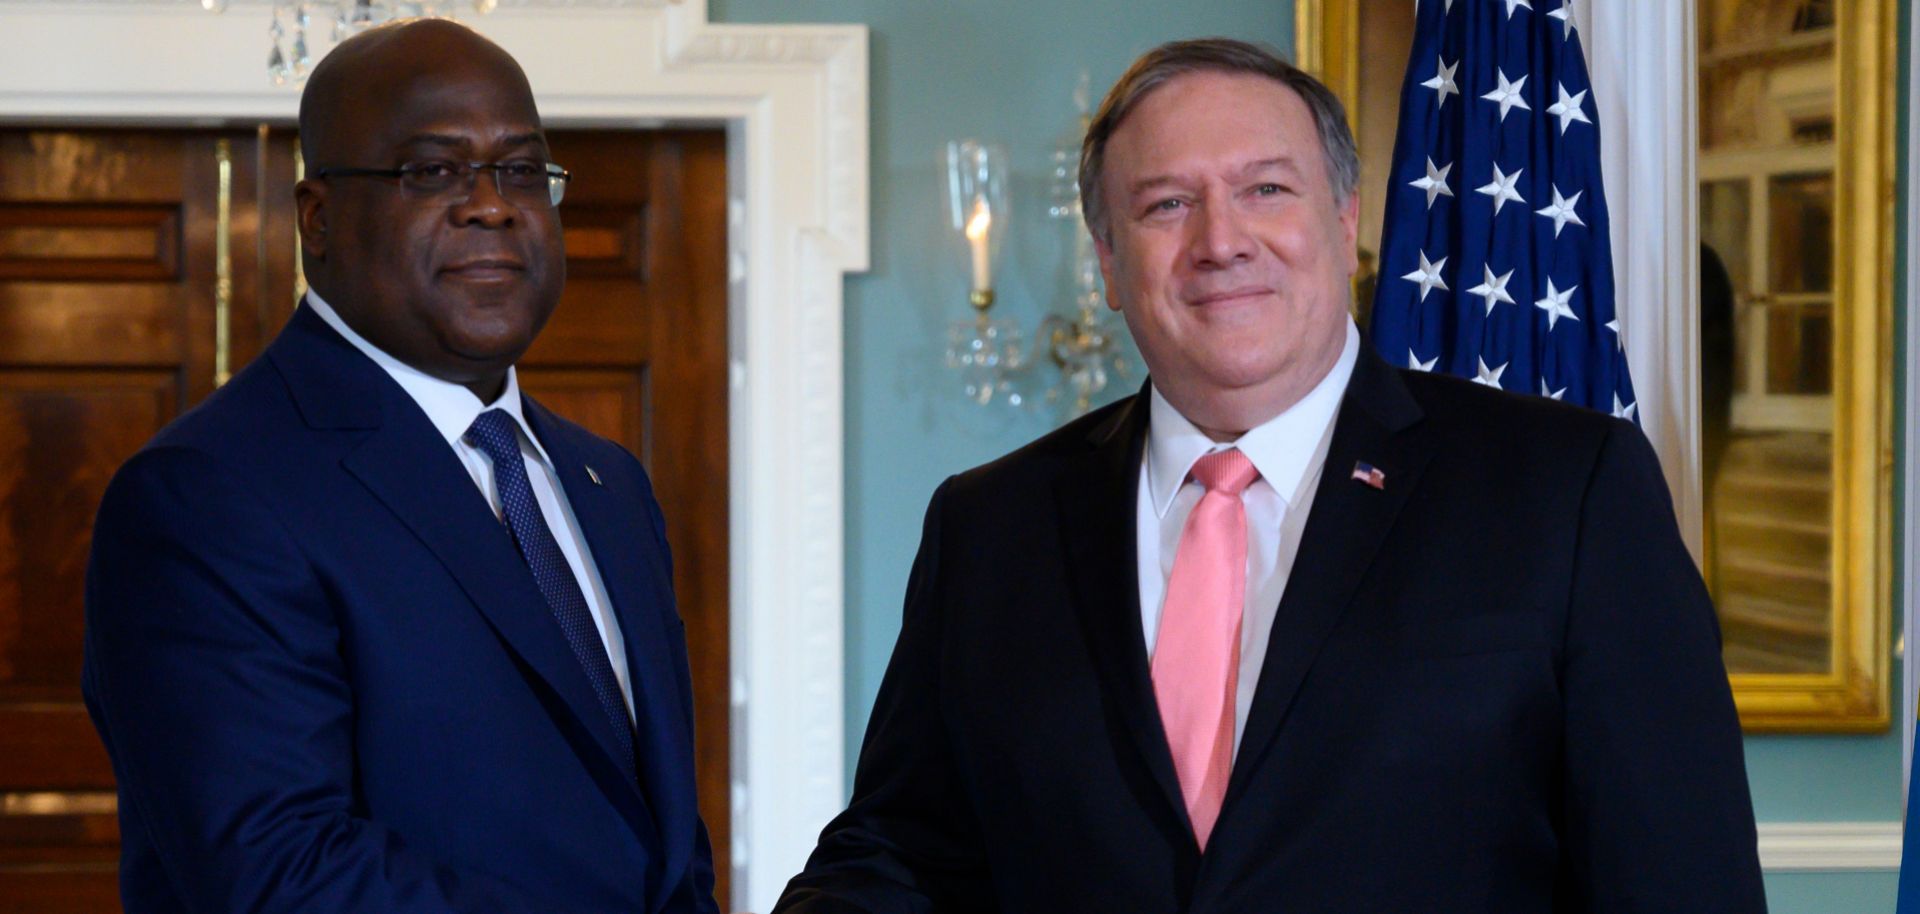 U.S. Secretary of State Mike Pompeo and Democratic Republic of the Congo President Felix Tshisekedi meet in Washington on April 3, 2019.